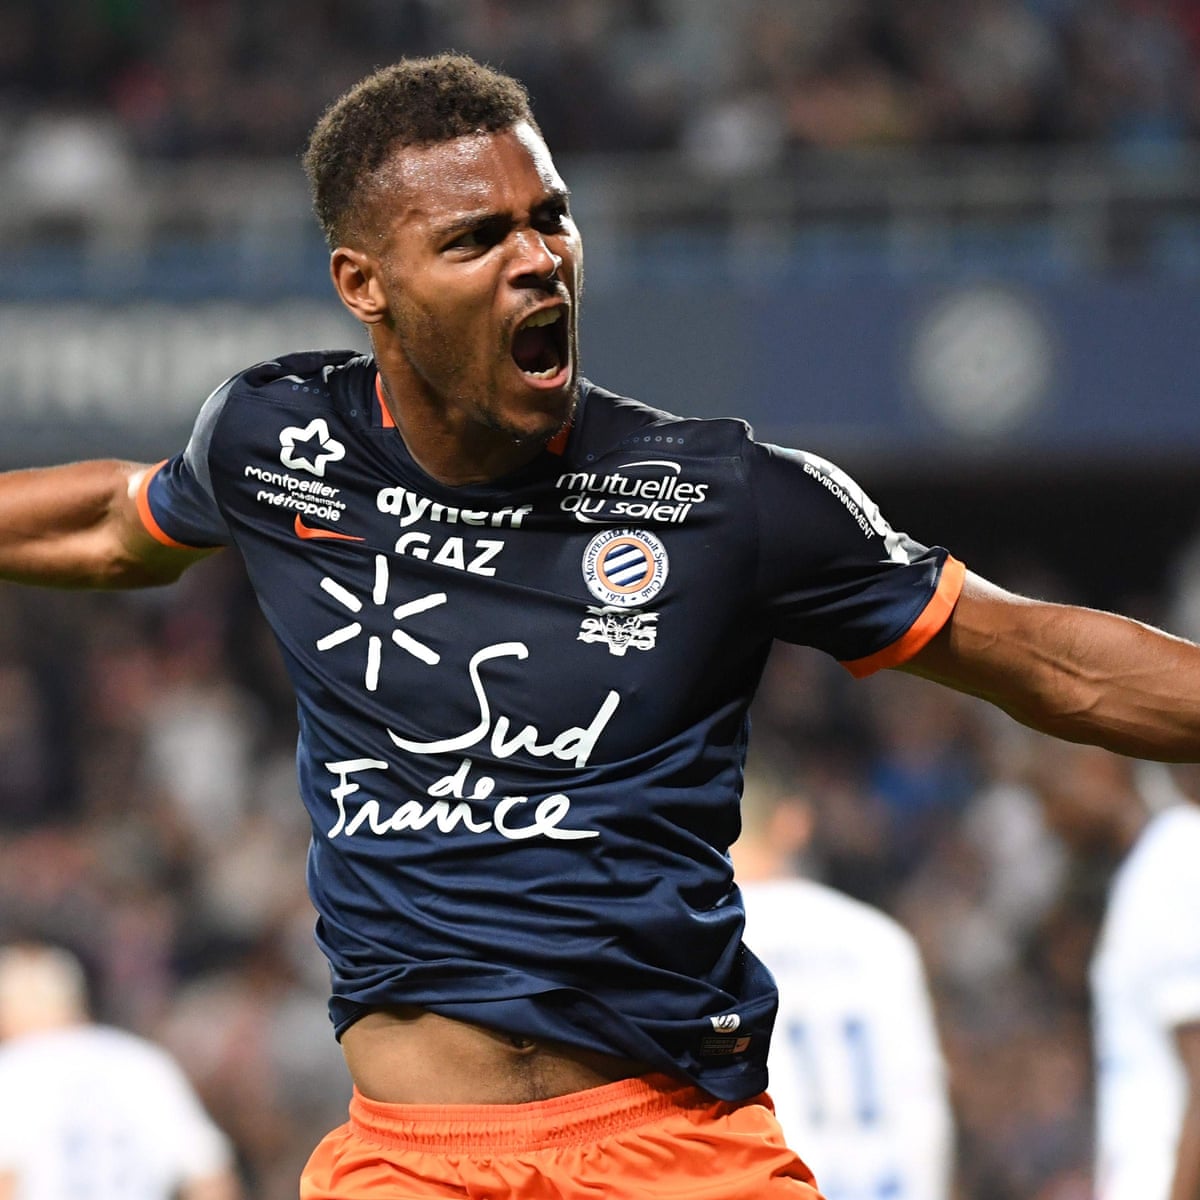 Merci!': Montpellier, France sends misspelled football jerseys to